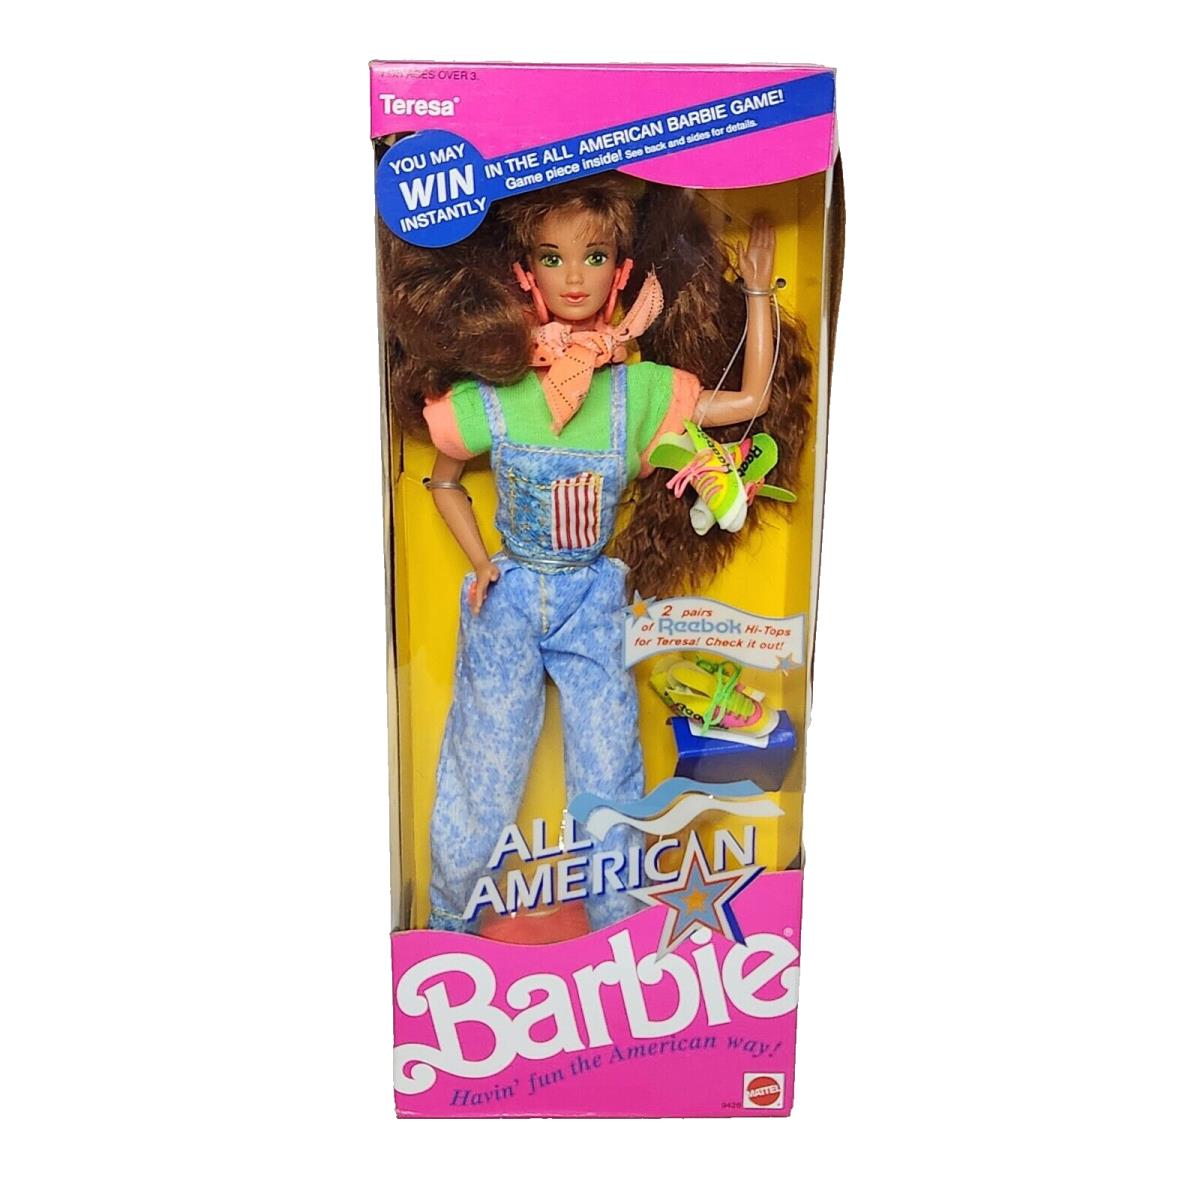 Vintage 1990 All American Teresa Barbie Mattel Box Reebok 9426